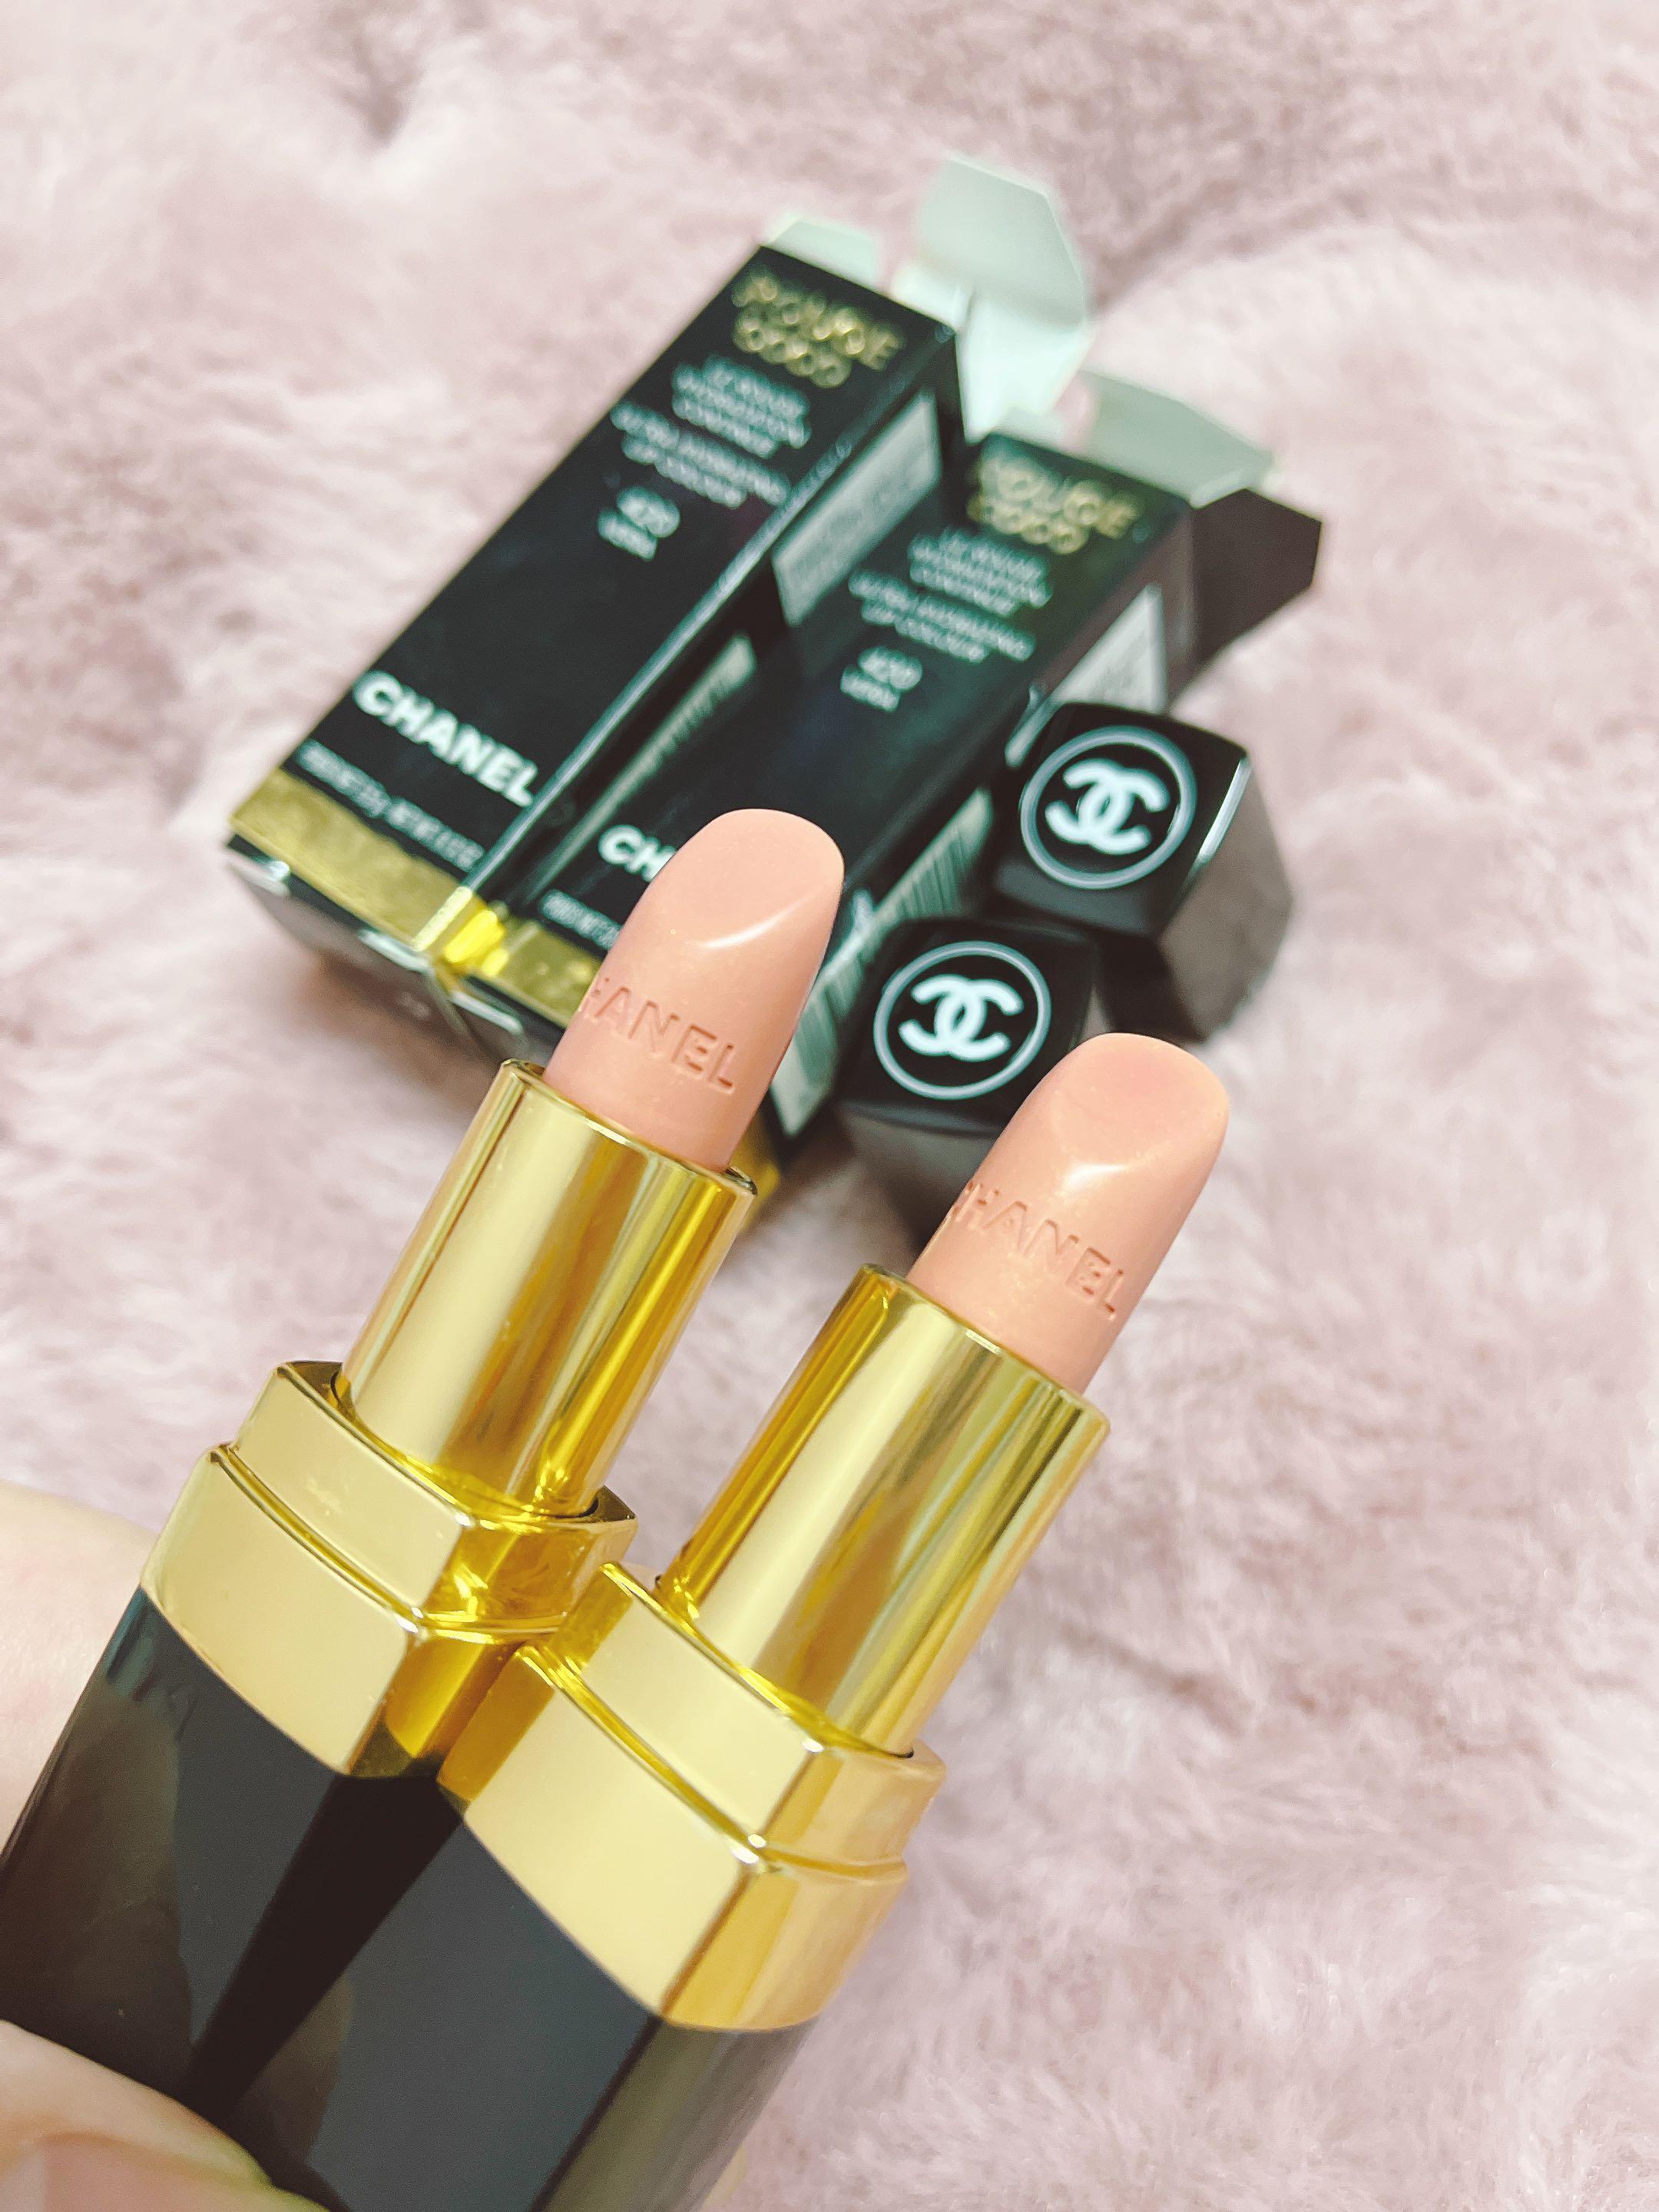 Chanel Rouge Coco Ultra Hydrating Lip Colour Lipstick - Adrienne